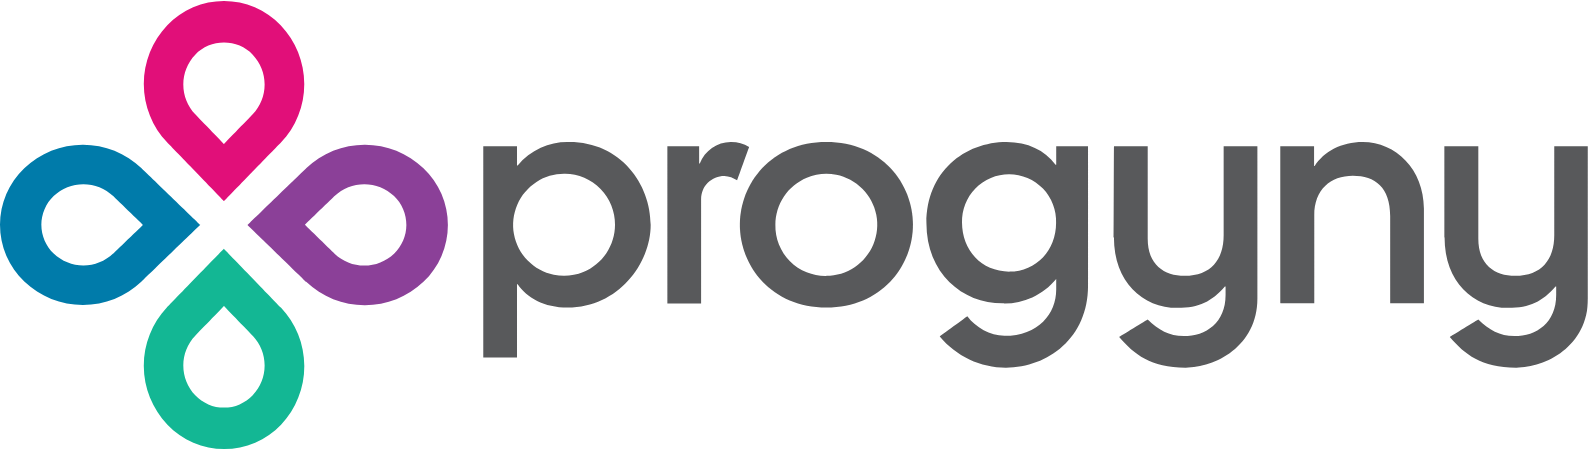 Progyny logo large (transparent PNG)